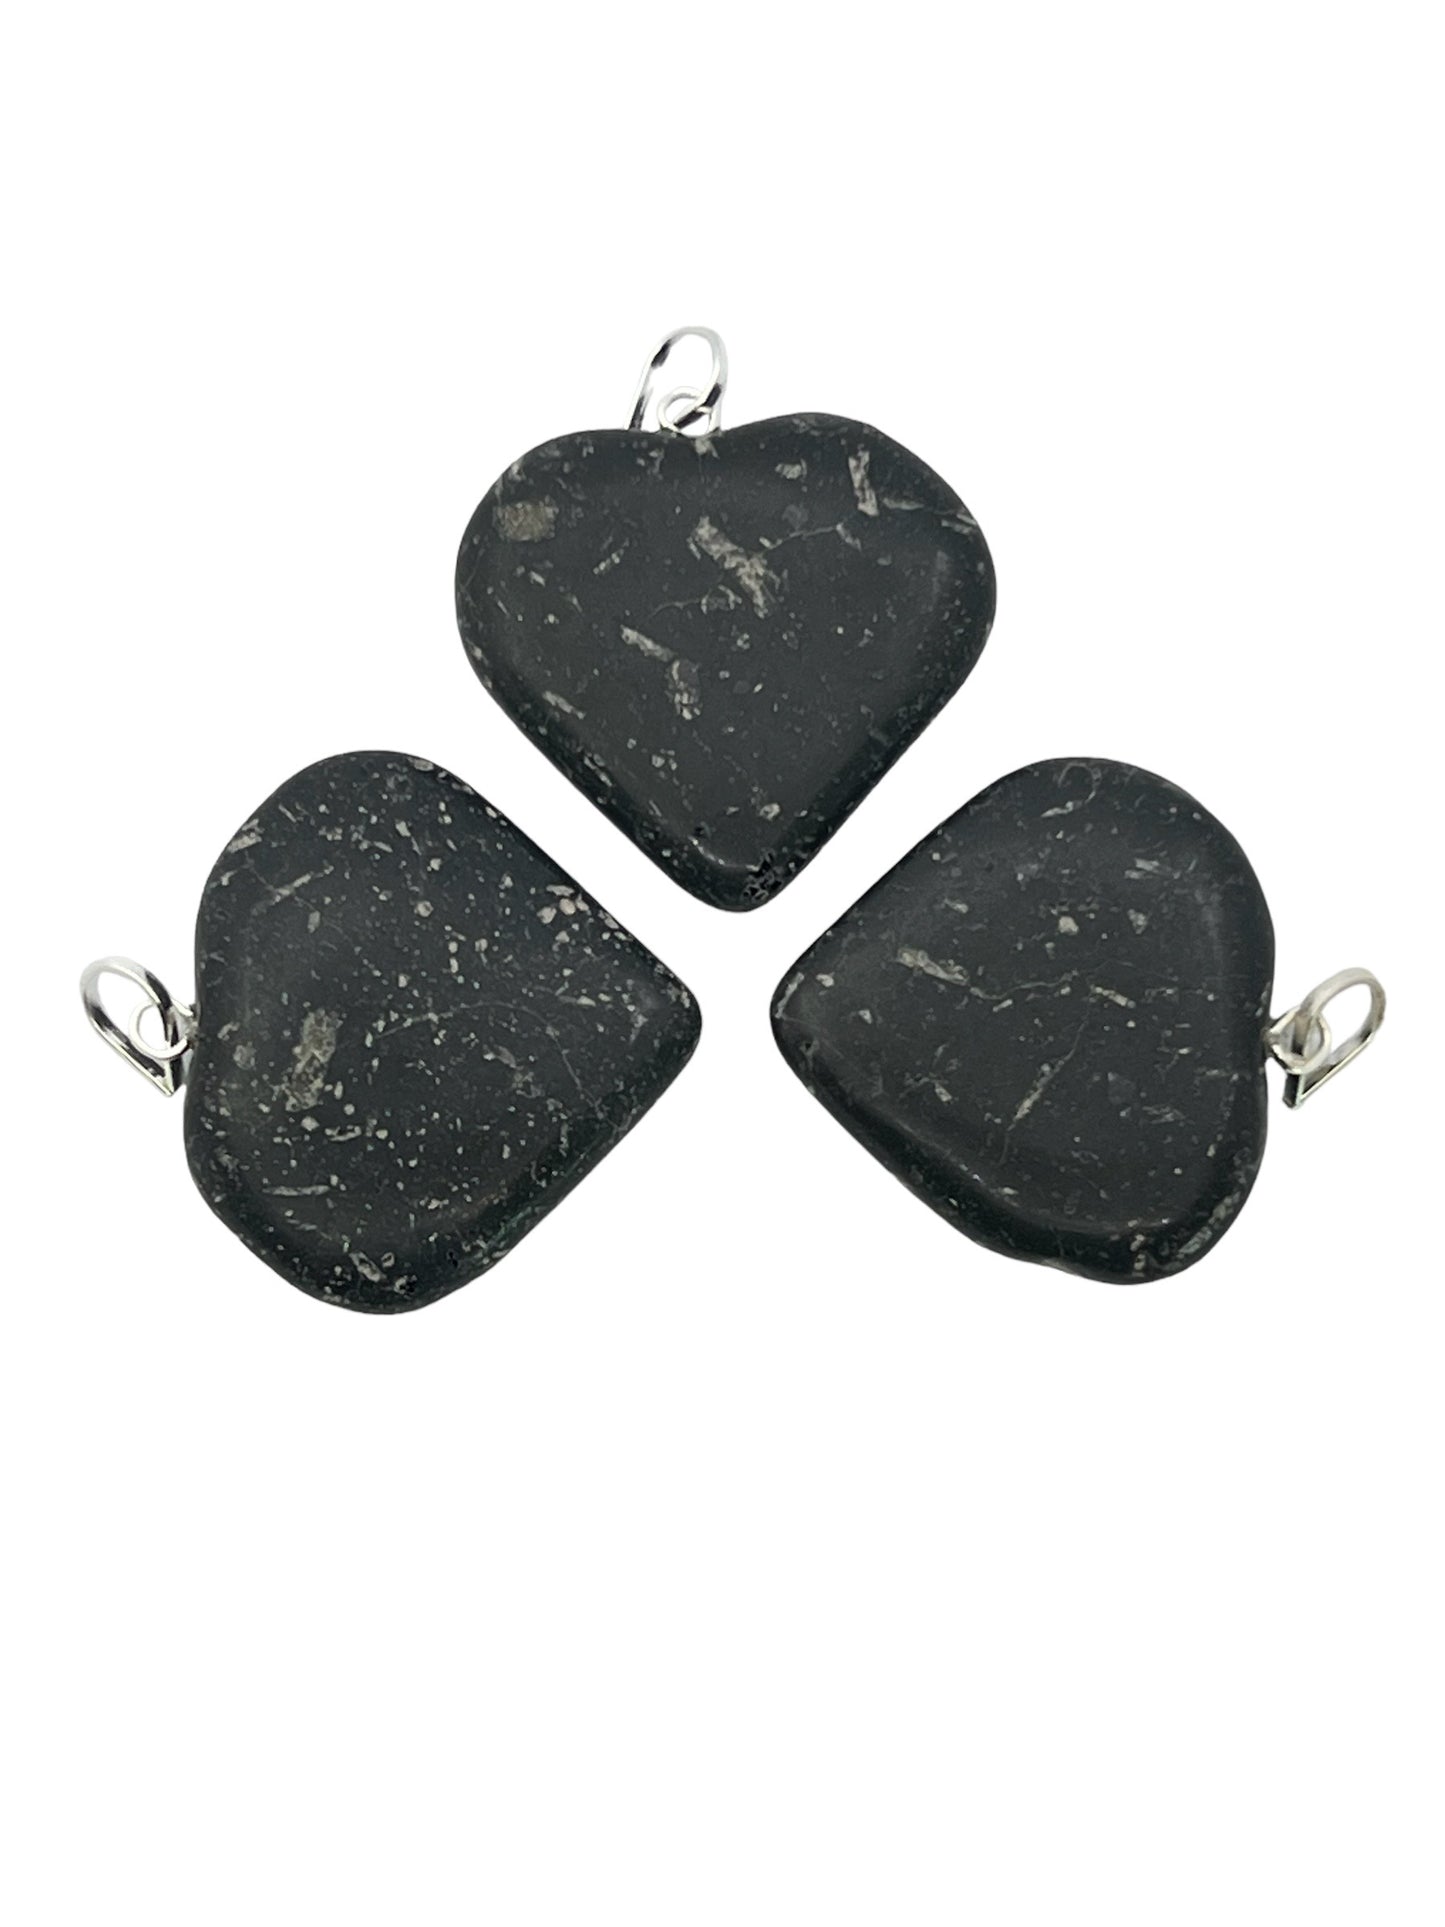 Puffy Heart-Shaped Pendant - Black Tourmaline (12-Pack)